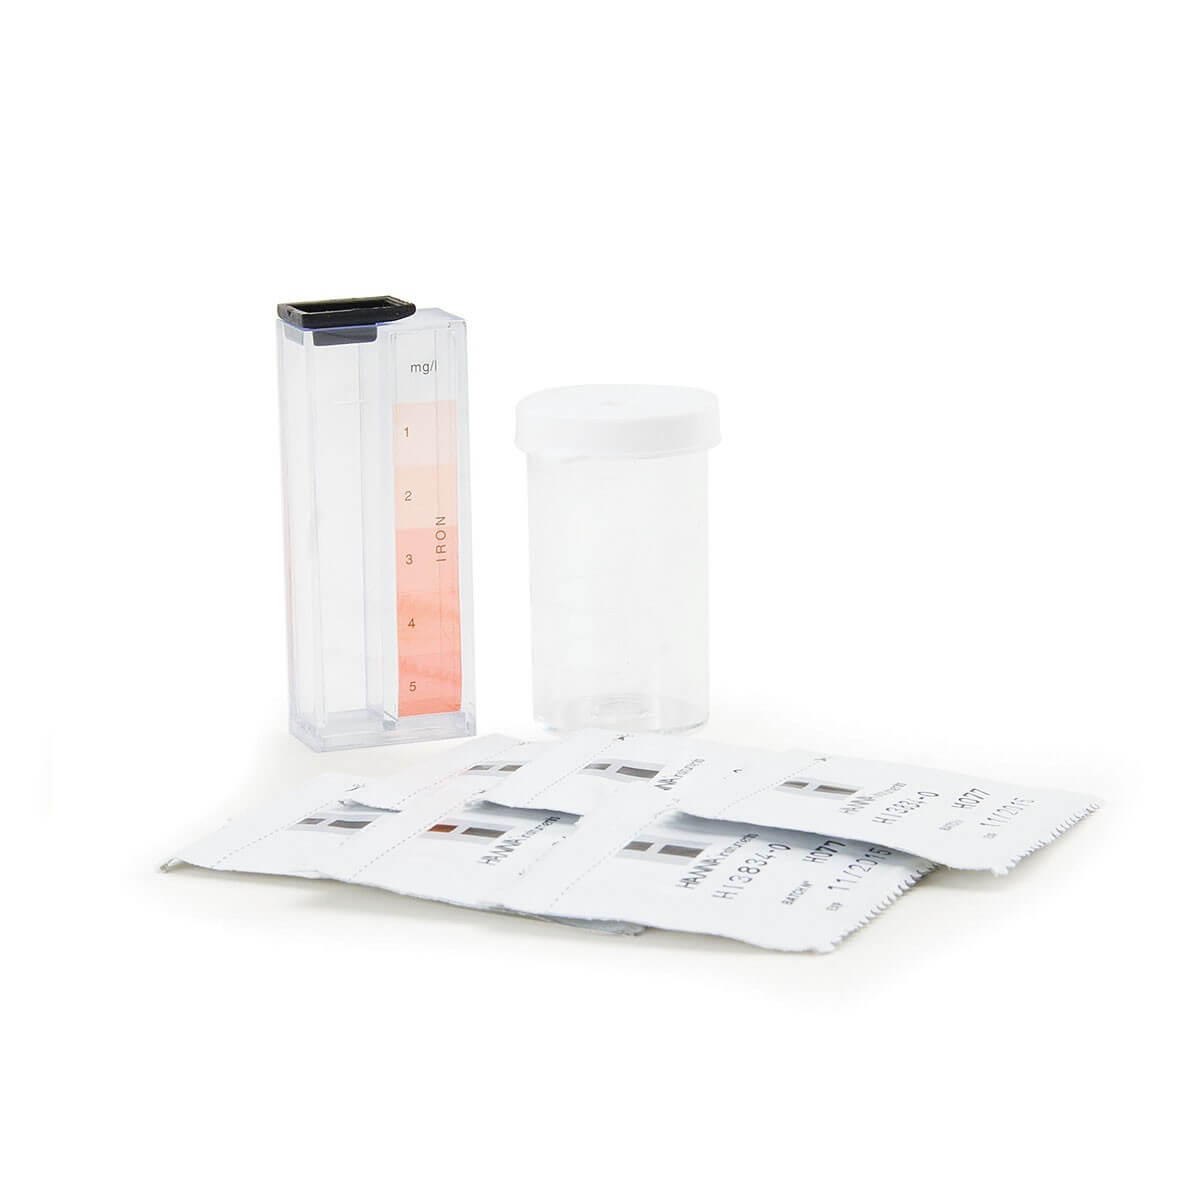 Kit de Teste Químico para Ferro 0-5 mg/l, 50 testes/ cx. Hanna